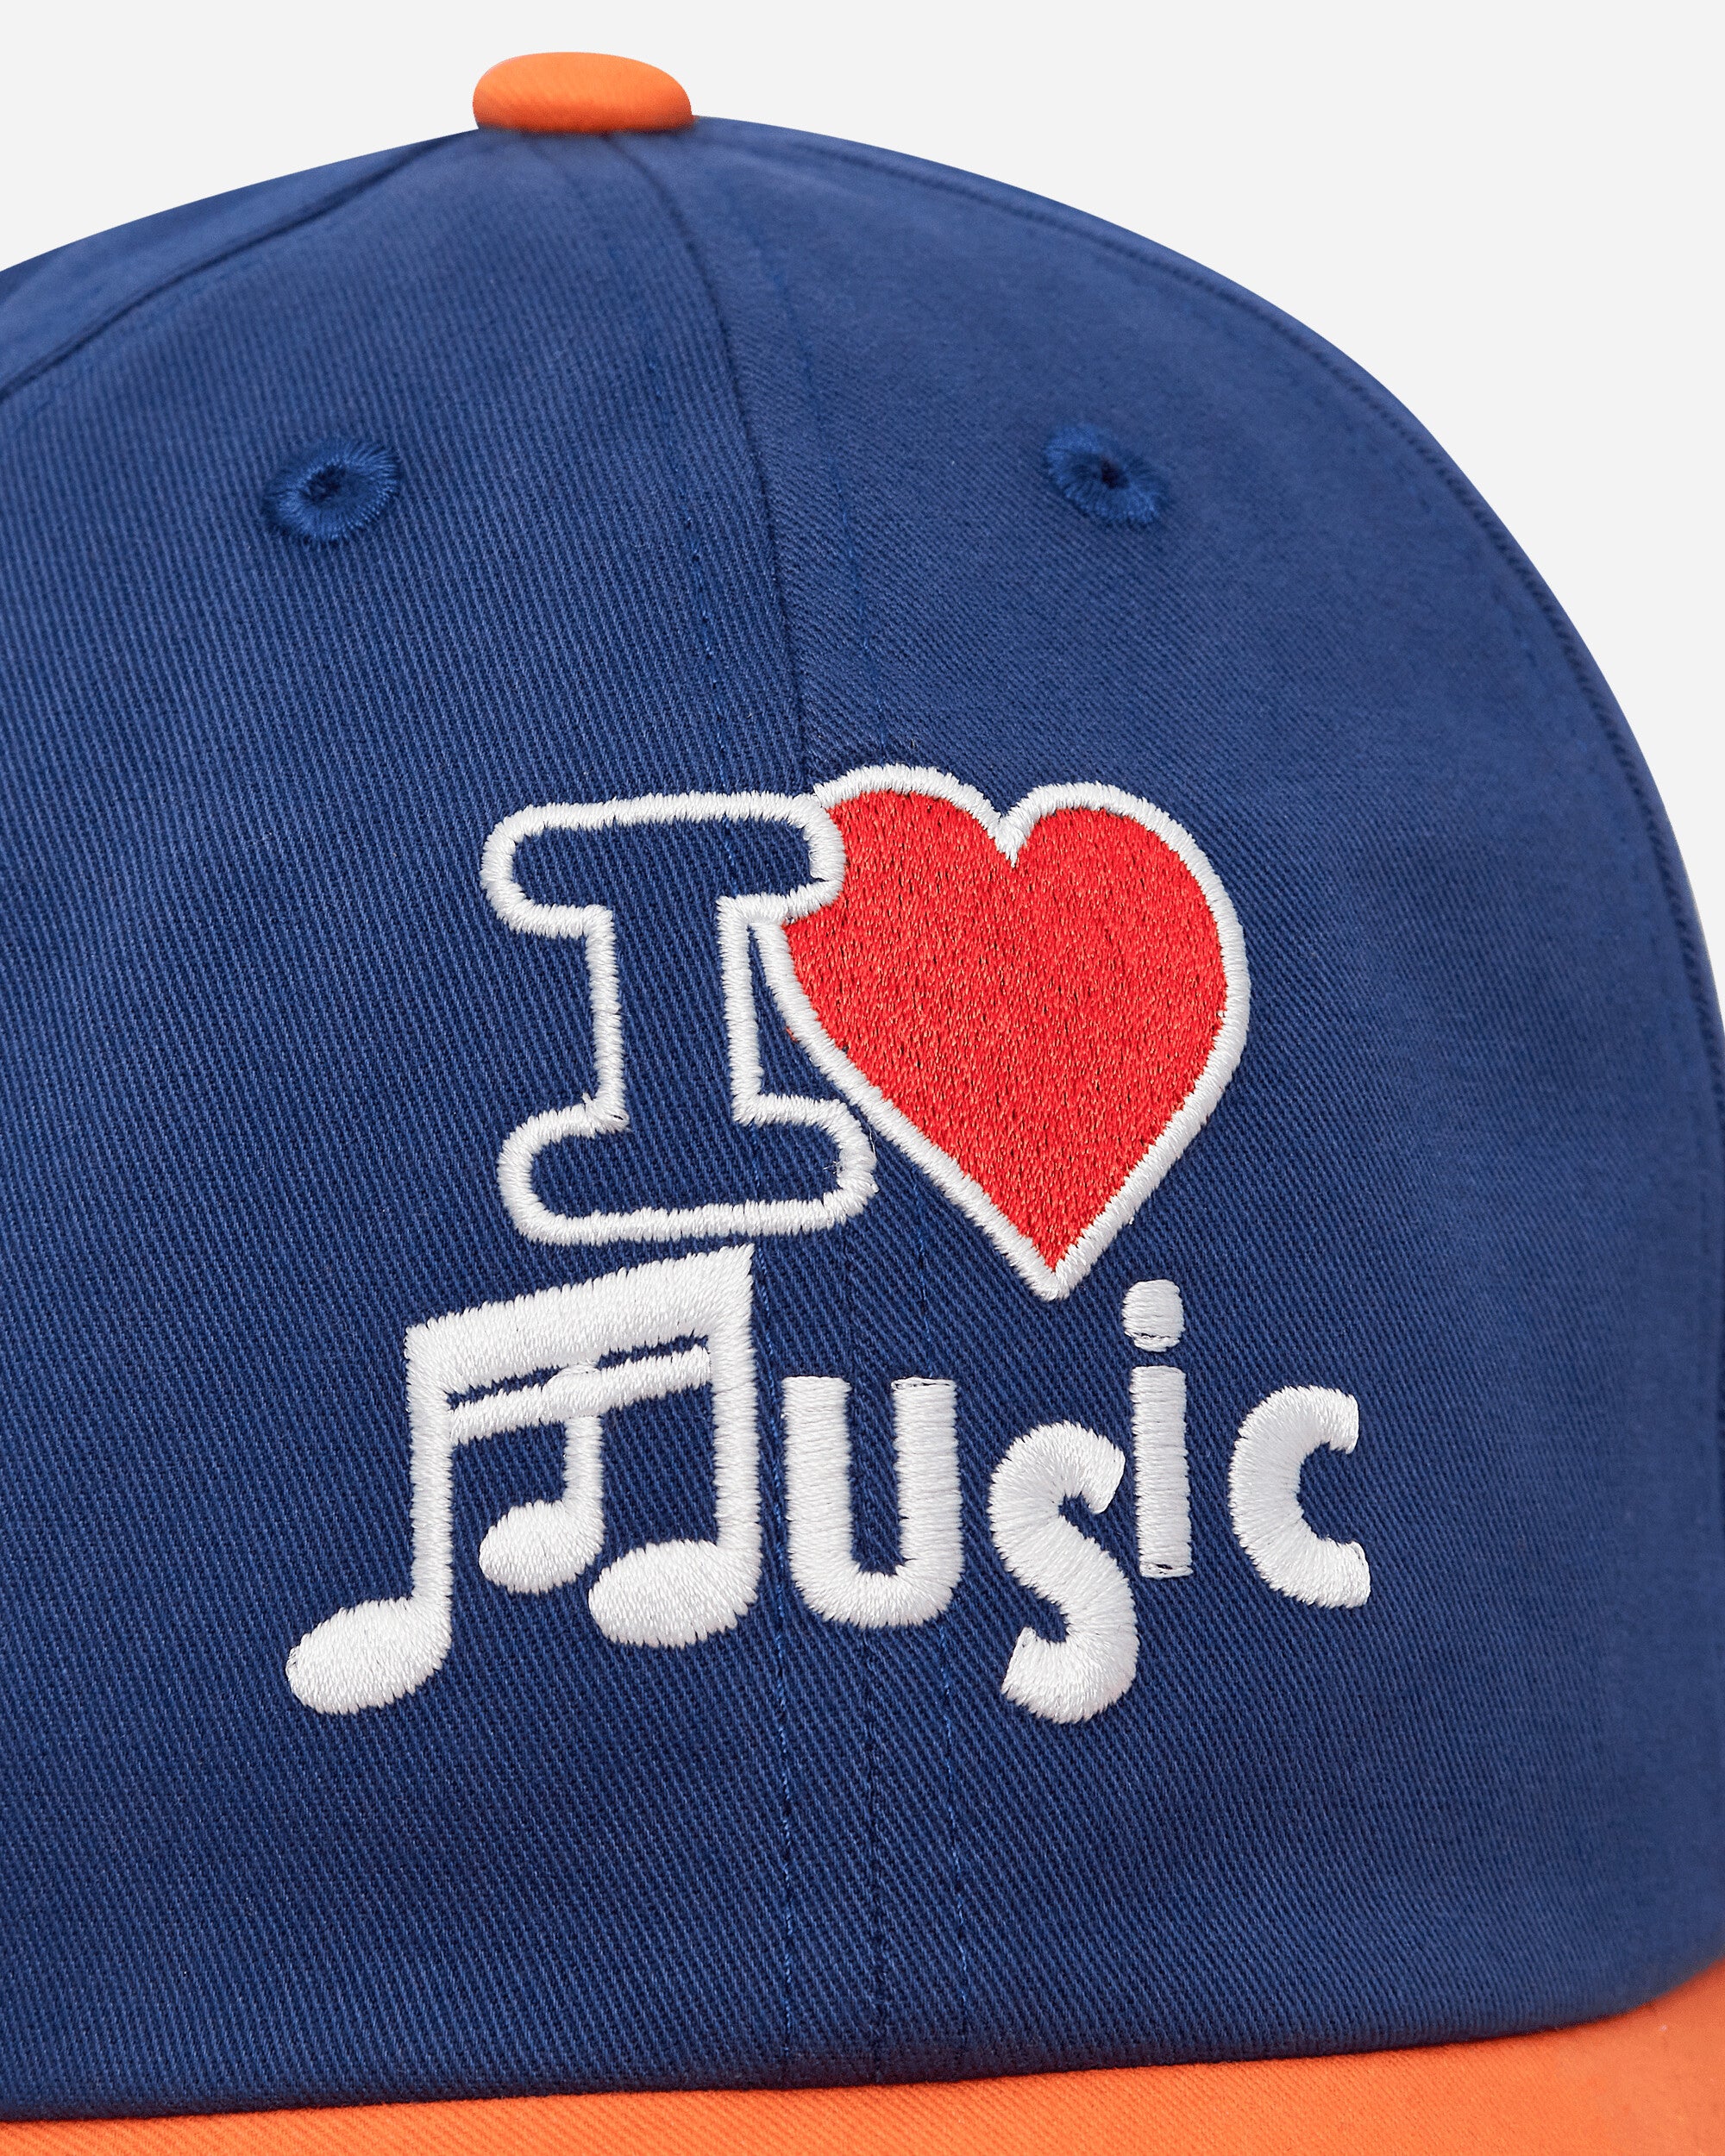 Public Possession "I Love Musik" Cap Bi-Color Hats Caps PPMODA24-020  1